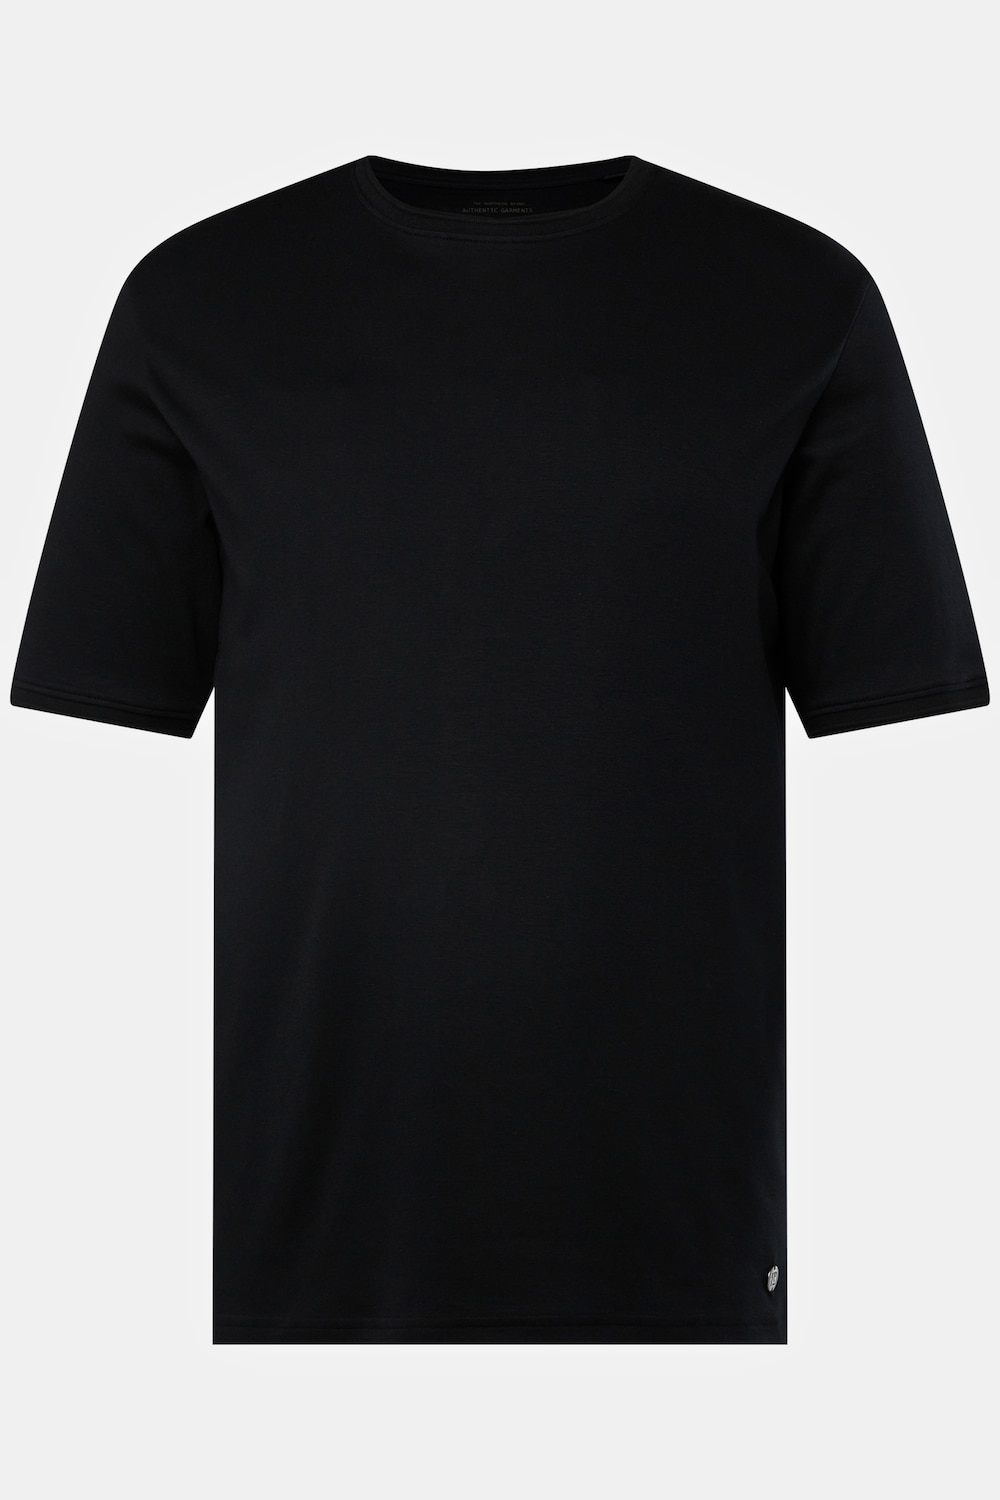 Grote Maten T-shirt, Heren, zwart, Maat: 6XL, Katoen/Viscose, JP1880